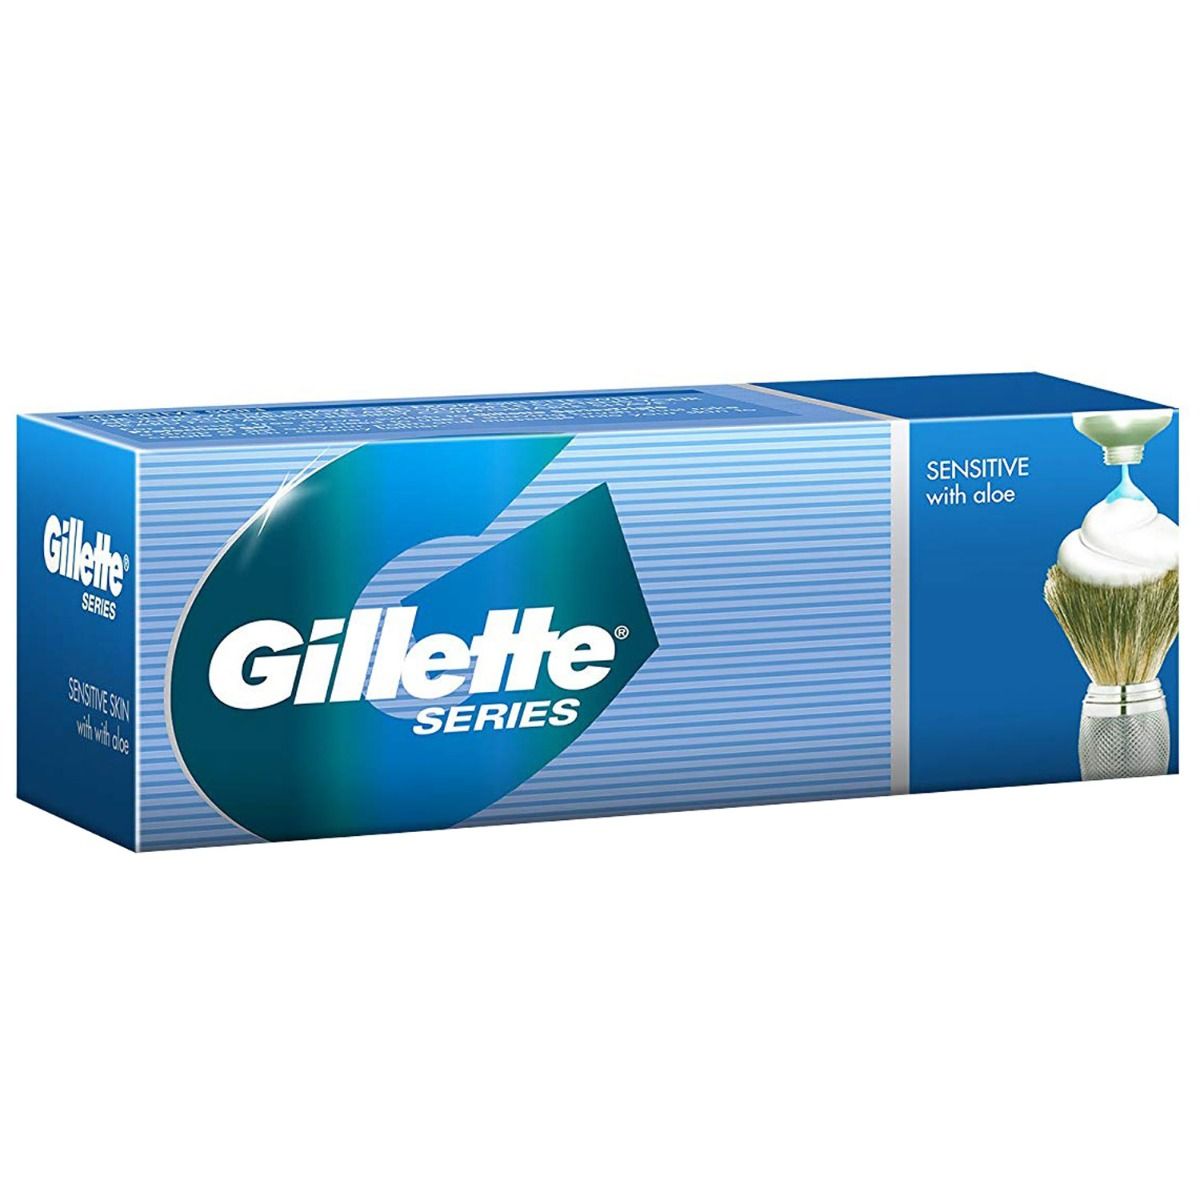 Gillette Series Sensitive Shaving Gel, 25 gm, Pack of 1 